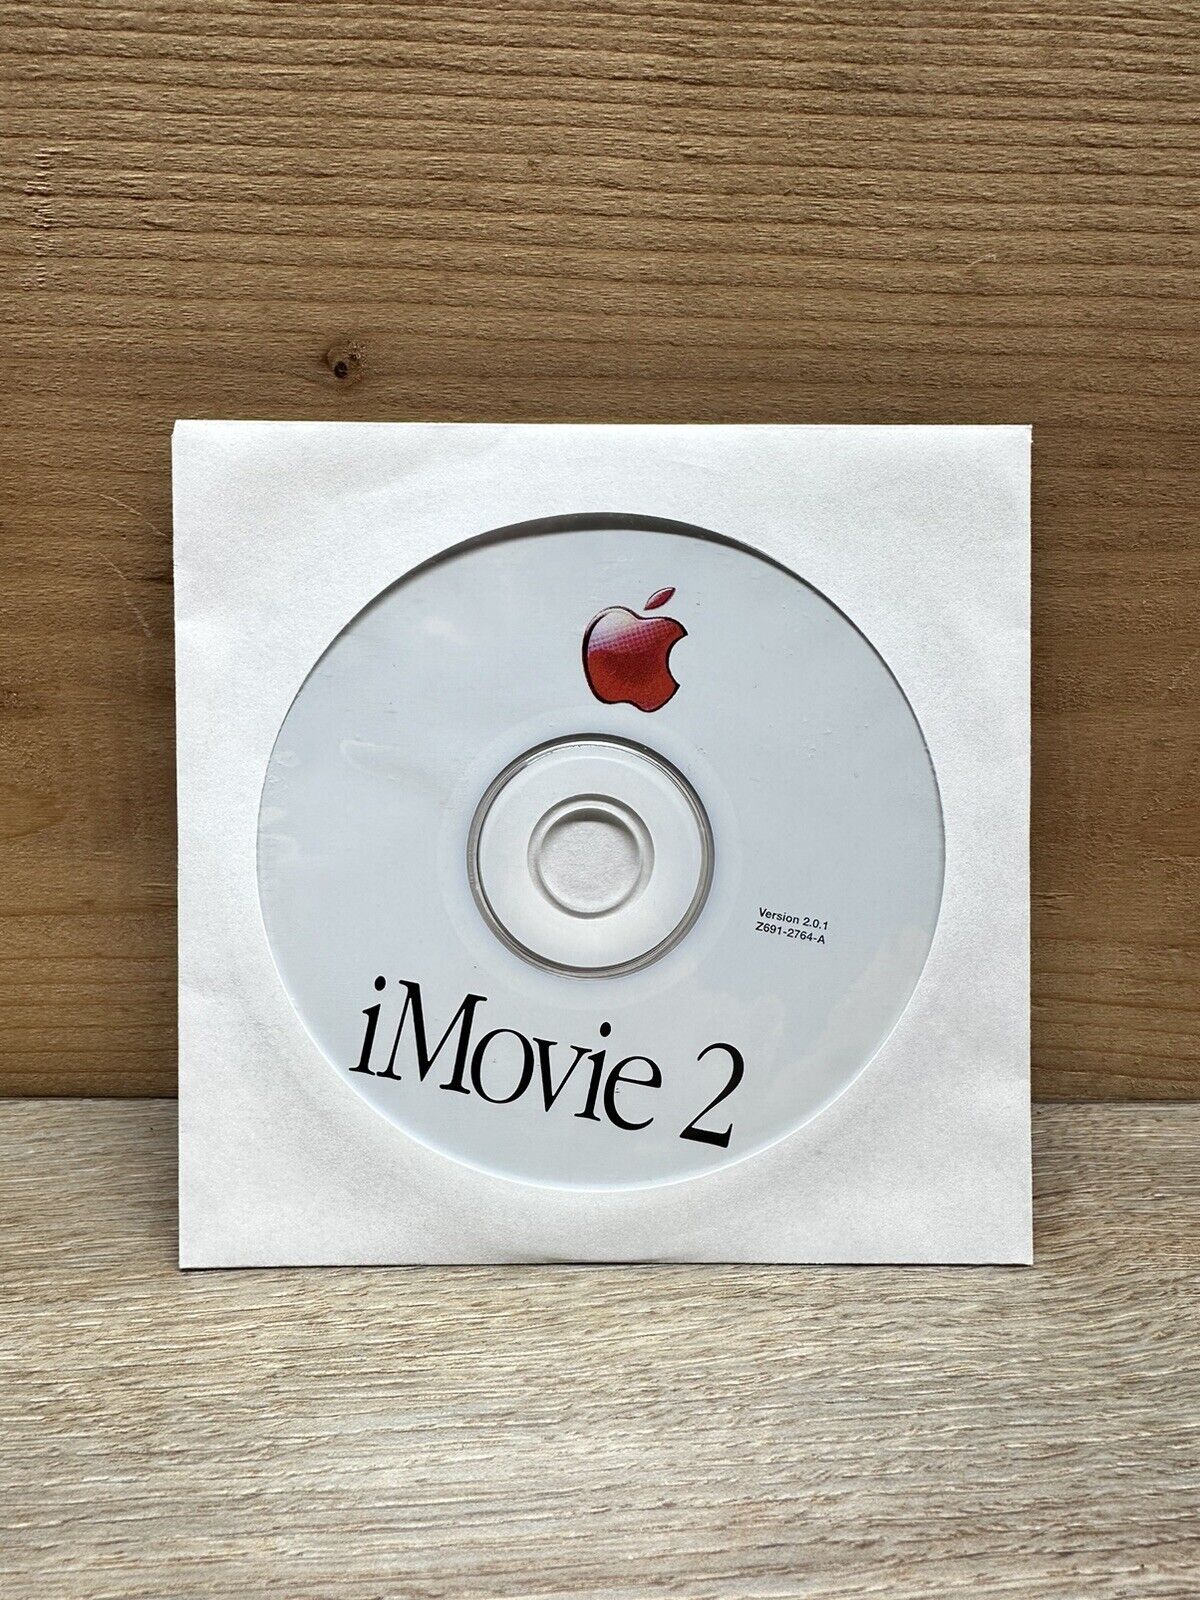 APPLE IMOVIE 2 SOFTWARE DISC Version 2.0.1, Z691-2764-A